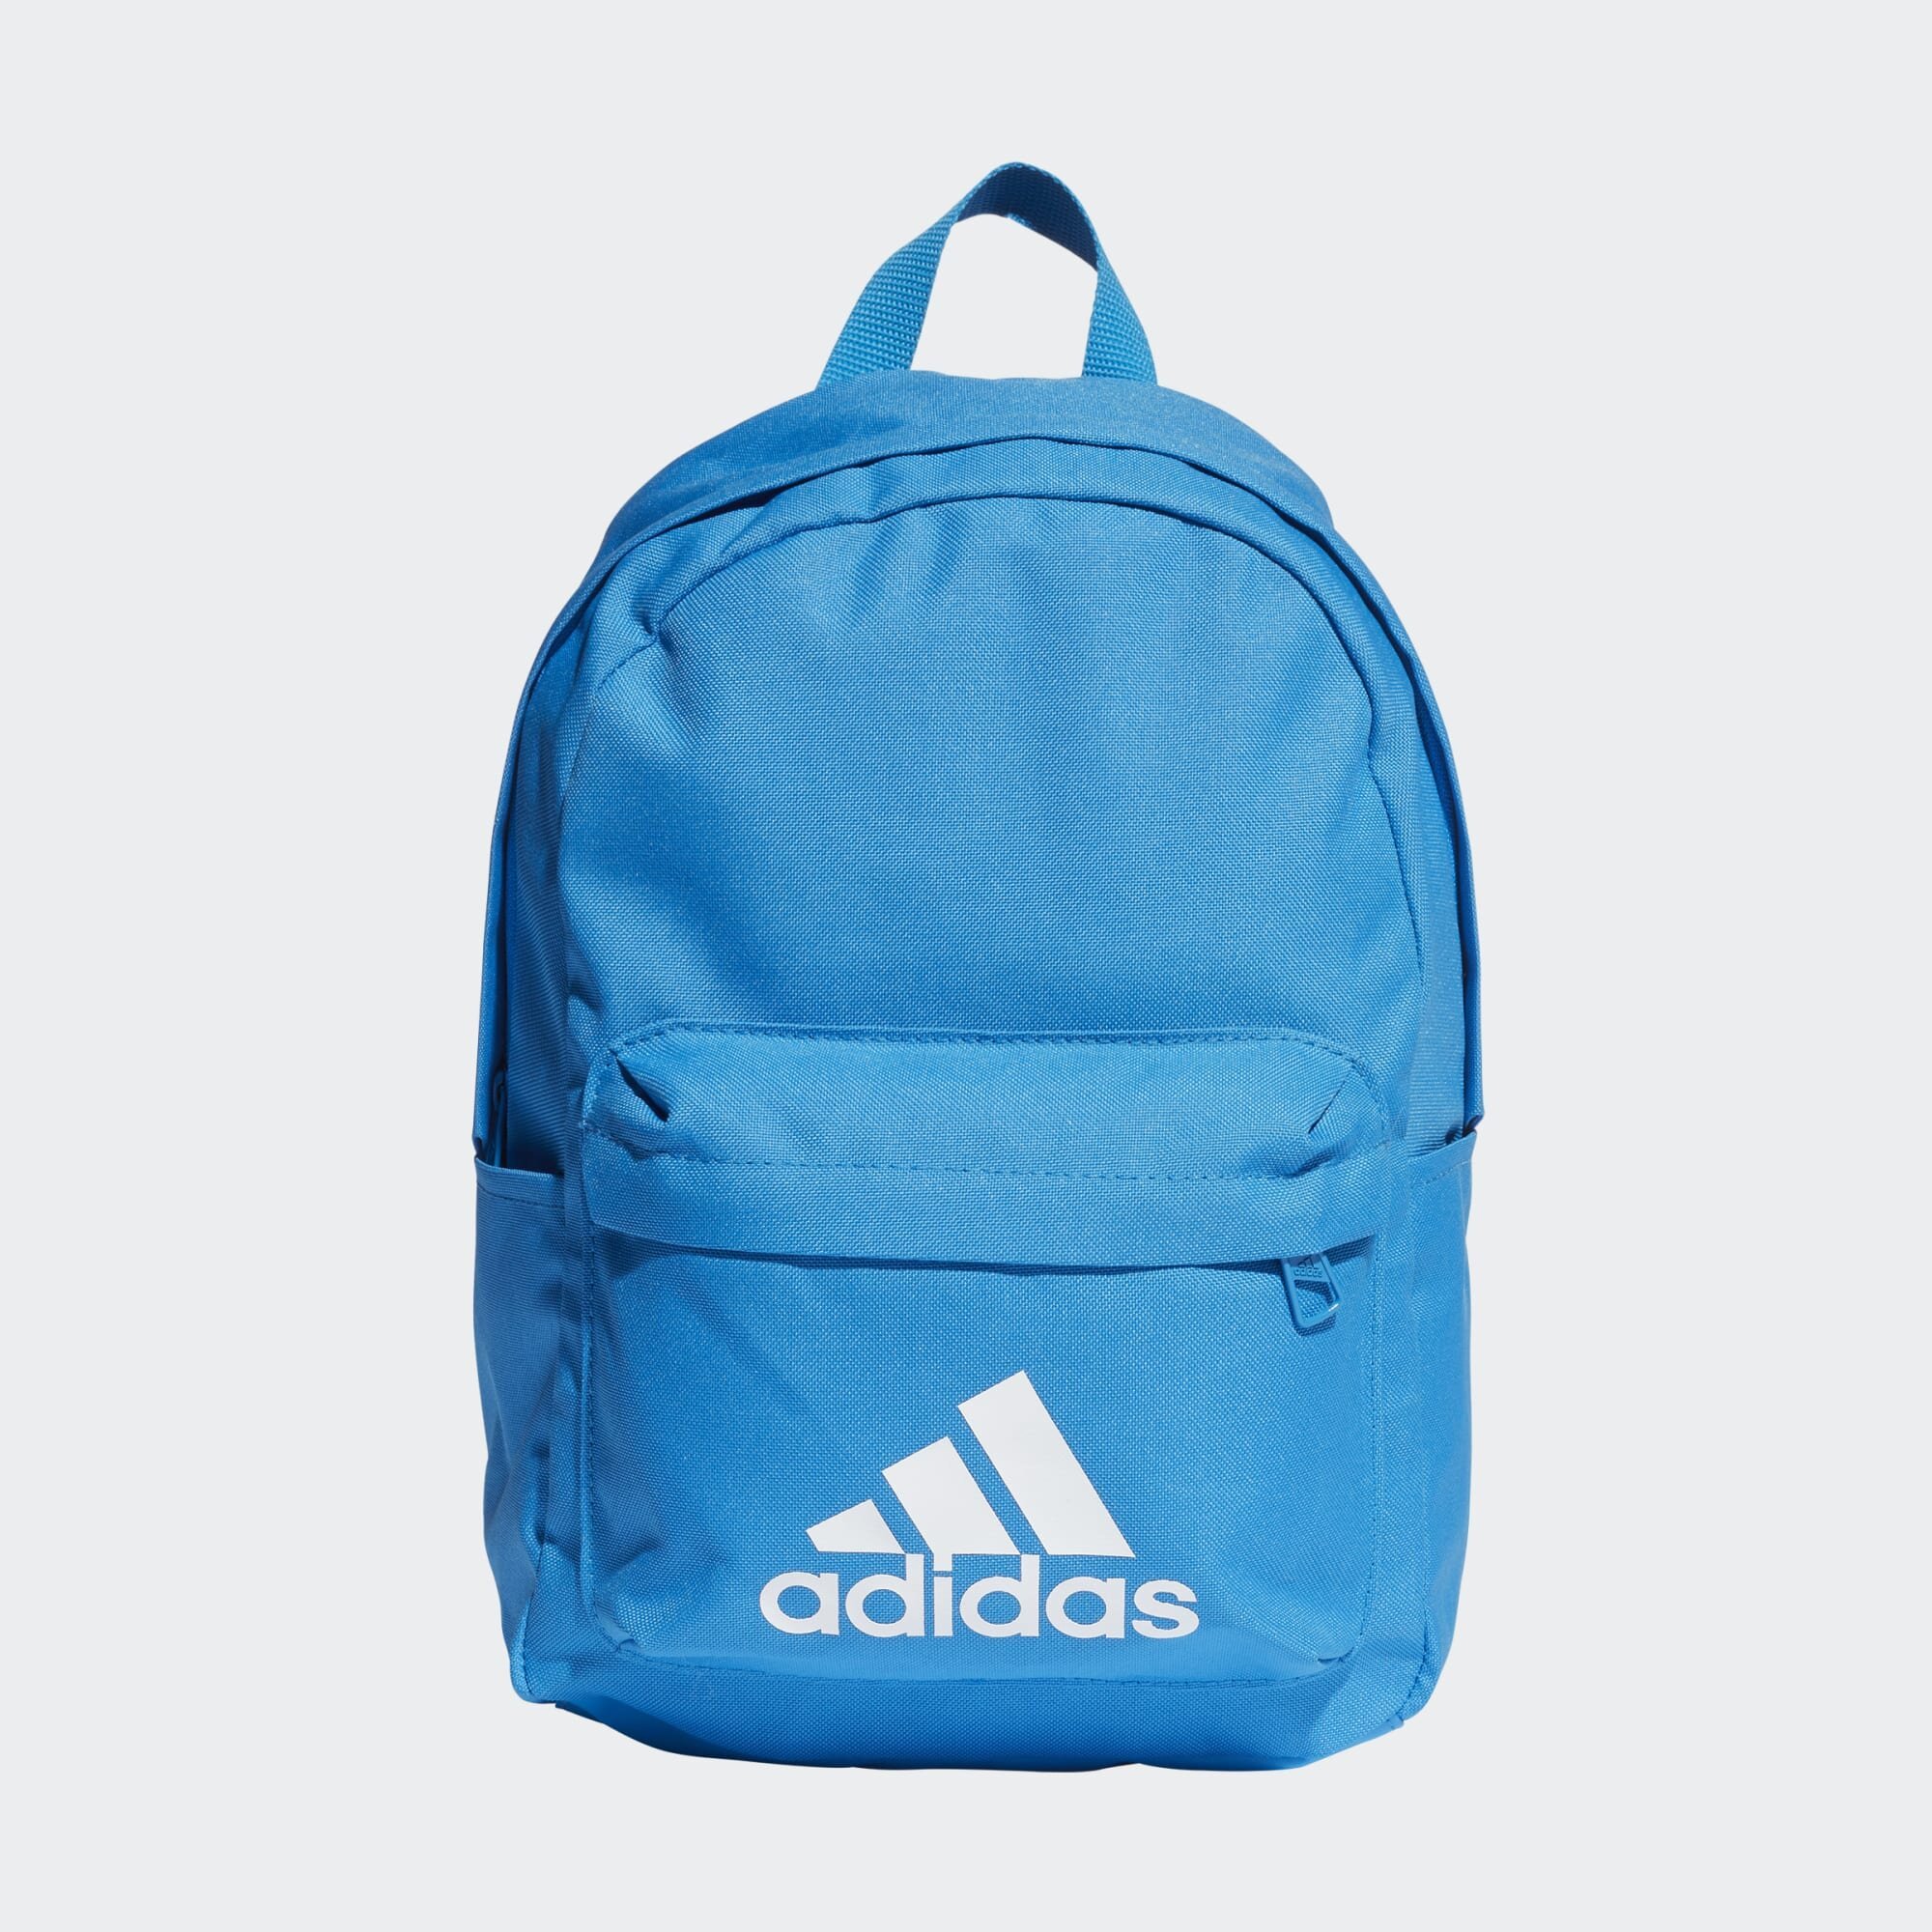 Adidas Power V Backpack - Buy Online 